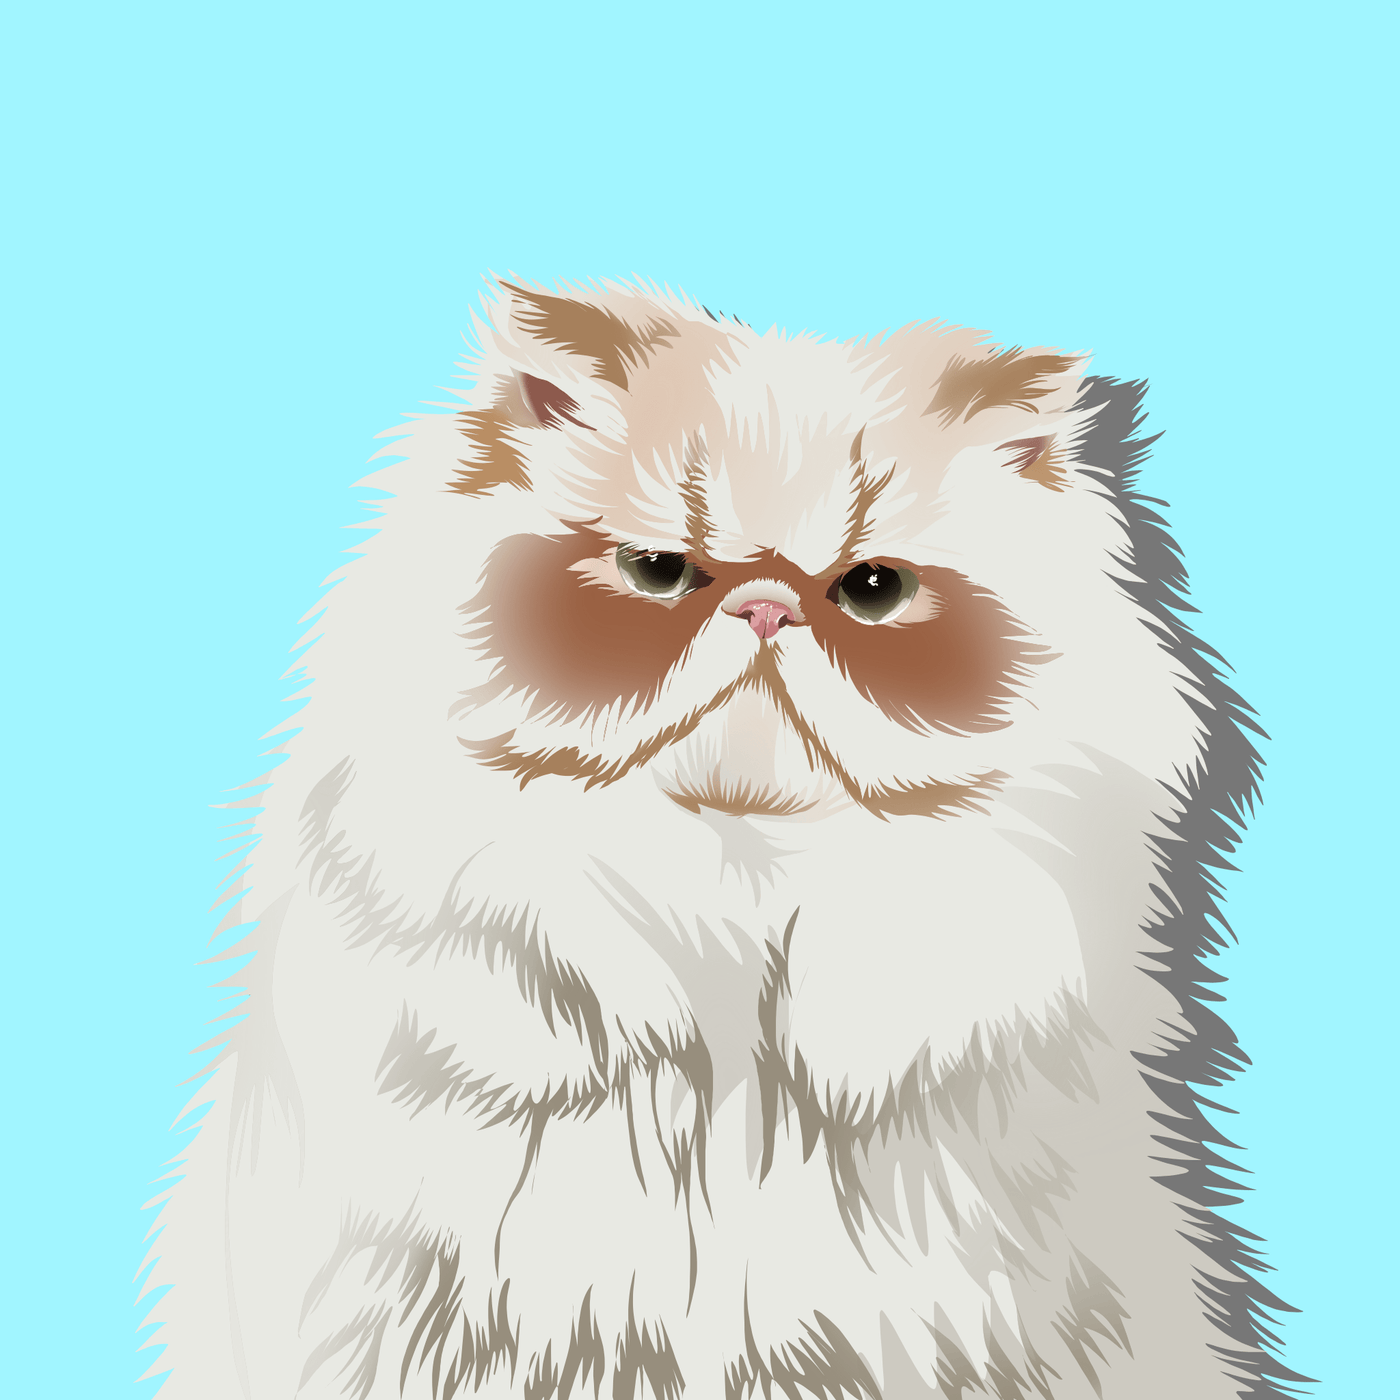 pet memorial vector art of an adorable white fur cat